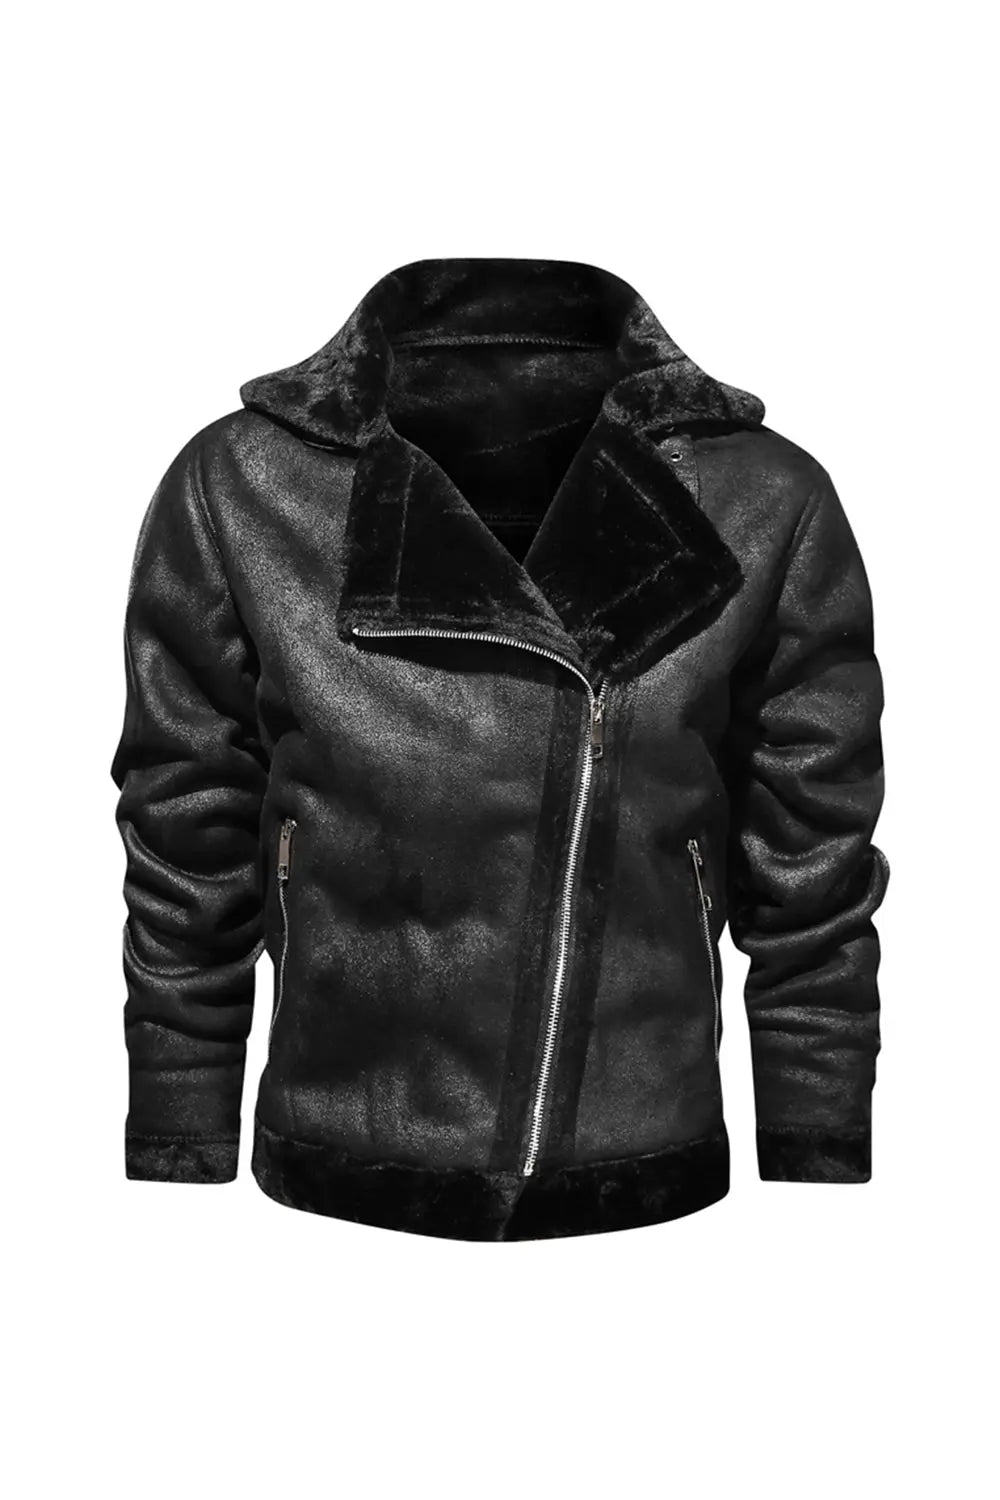 Leather Jacket With Velvet - Black - Strange Clothes